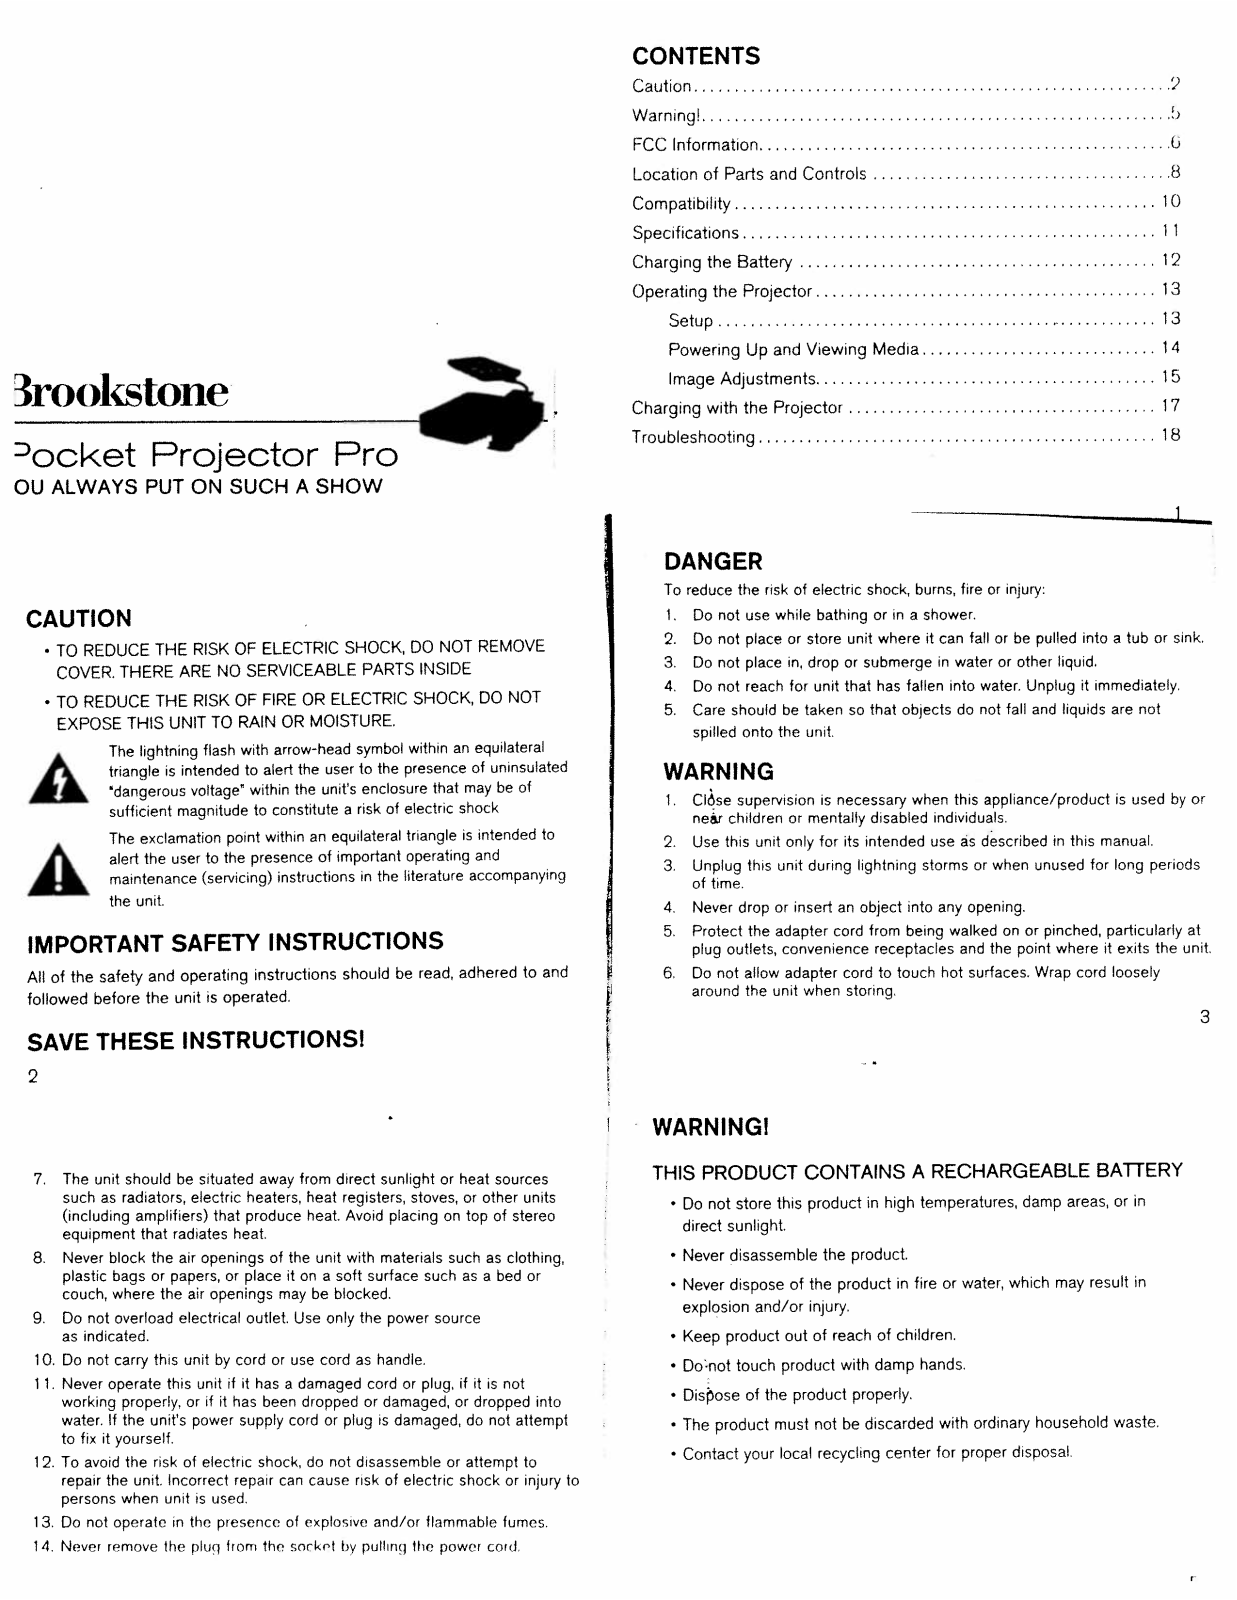 Brookstone Pocket Projector Pro User Manual